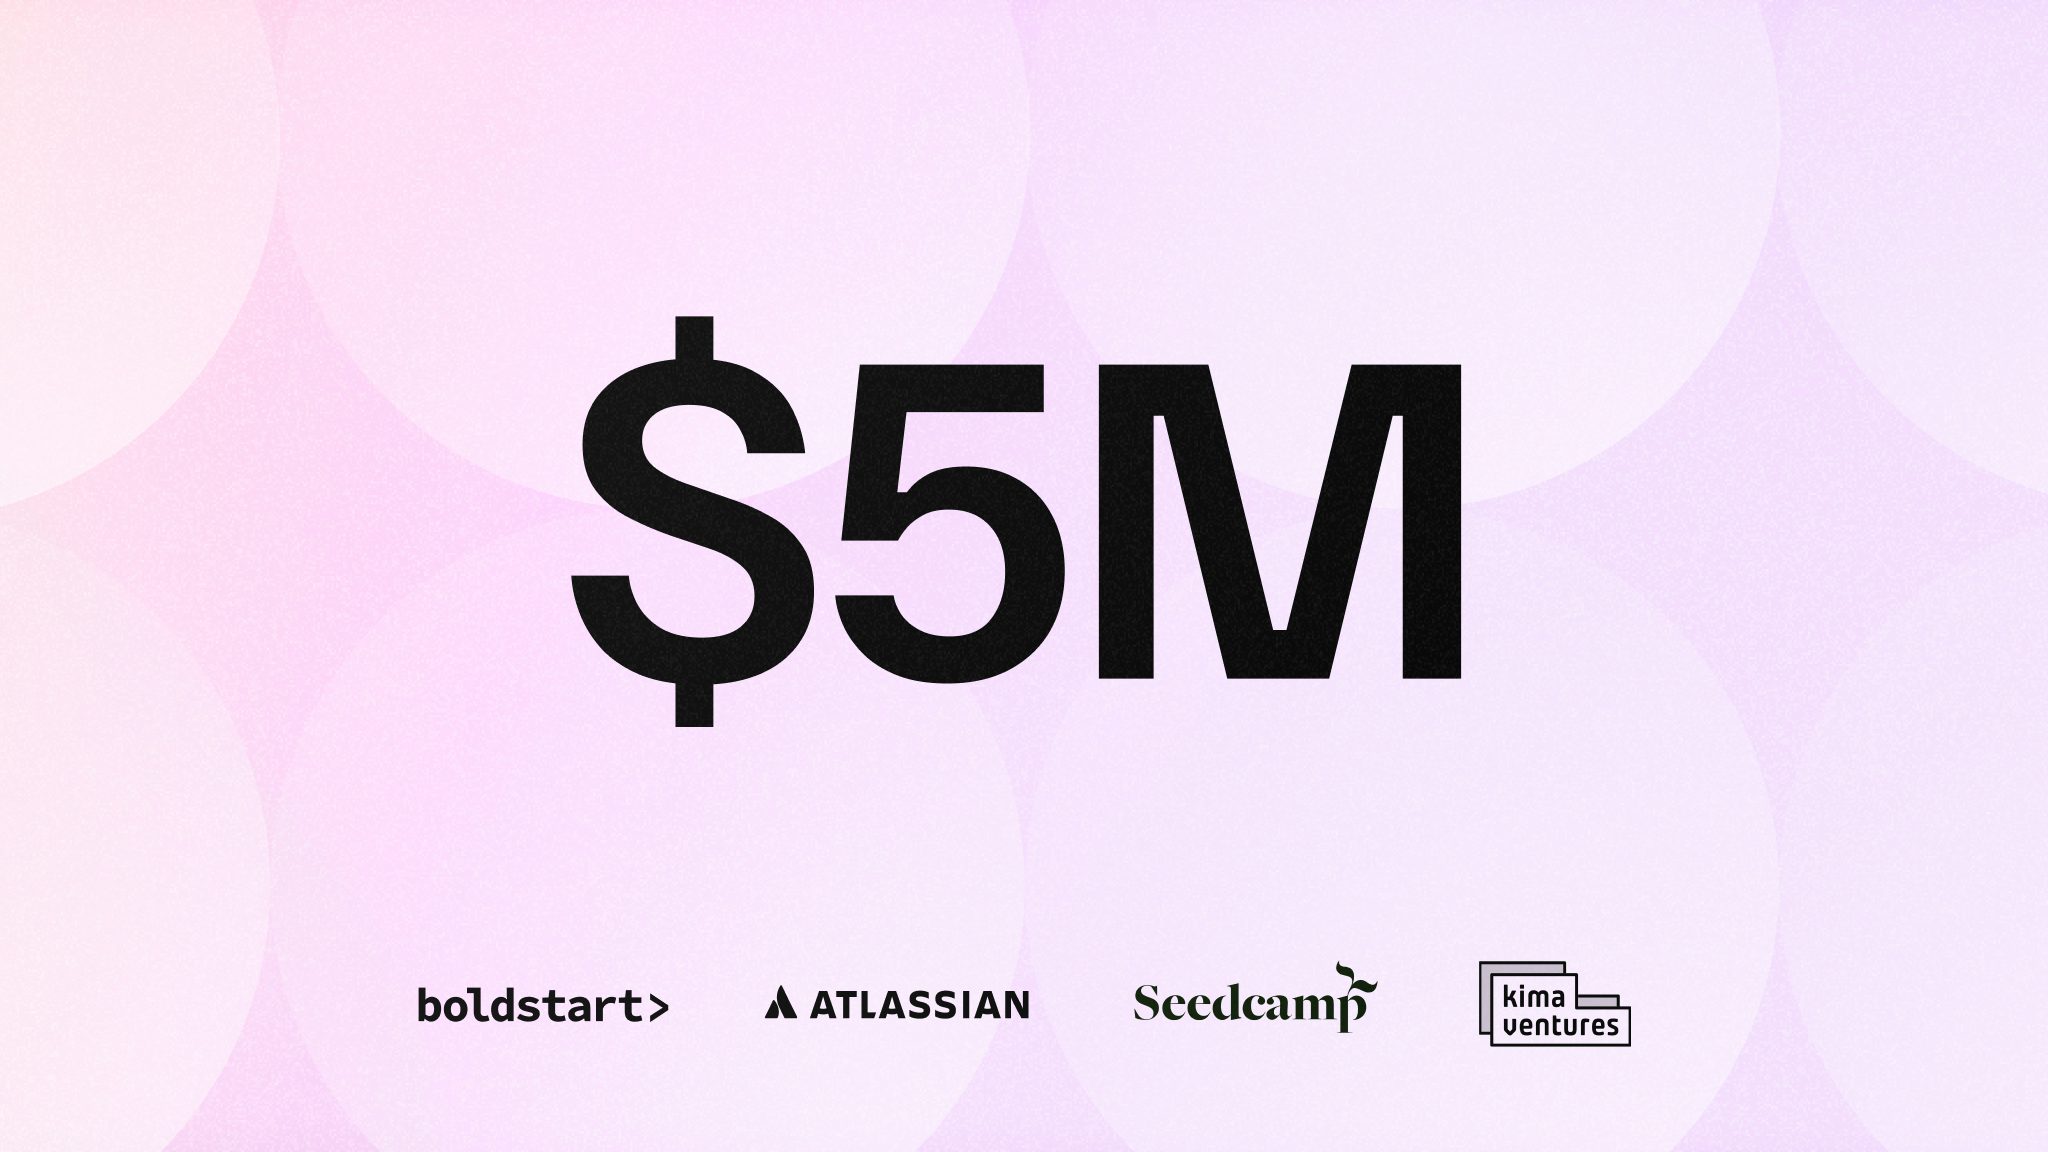 Liveblocks raises $5M in seed funding from Boldstart, Atlassian, Seedcamp and more